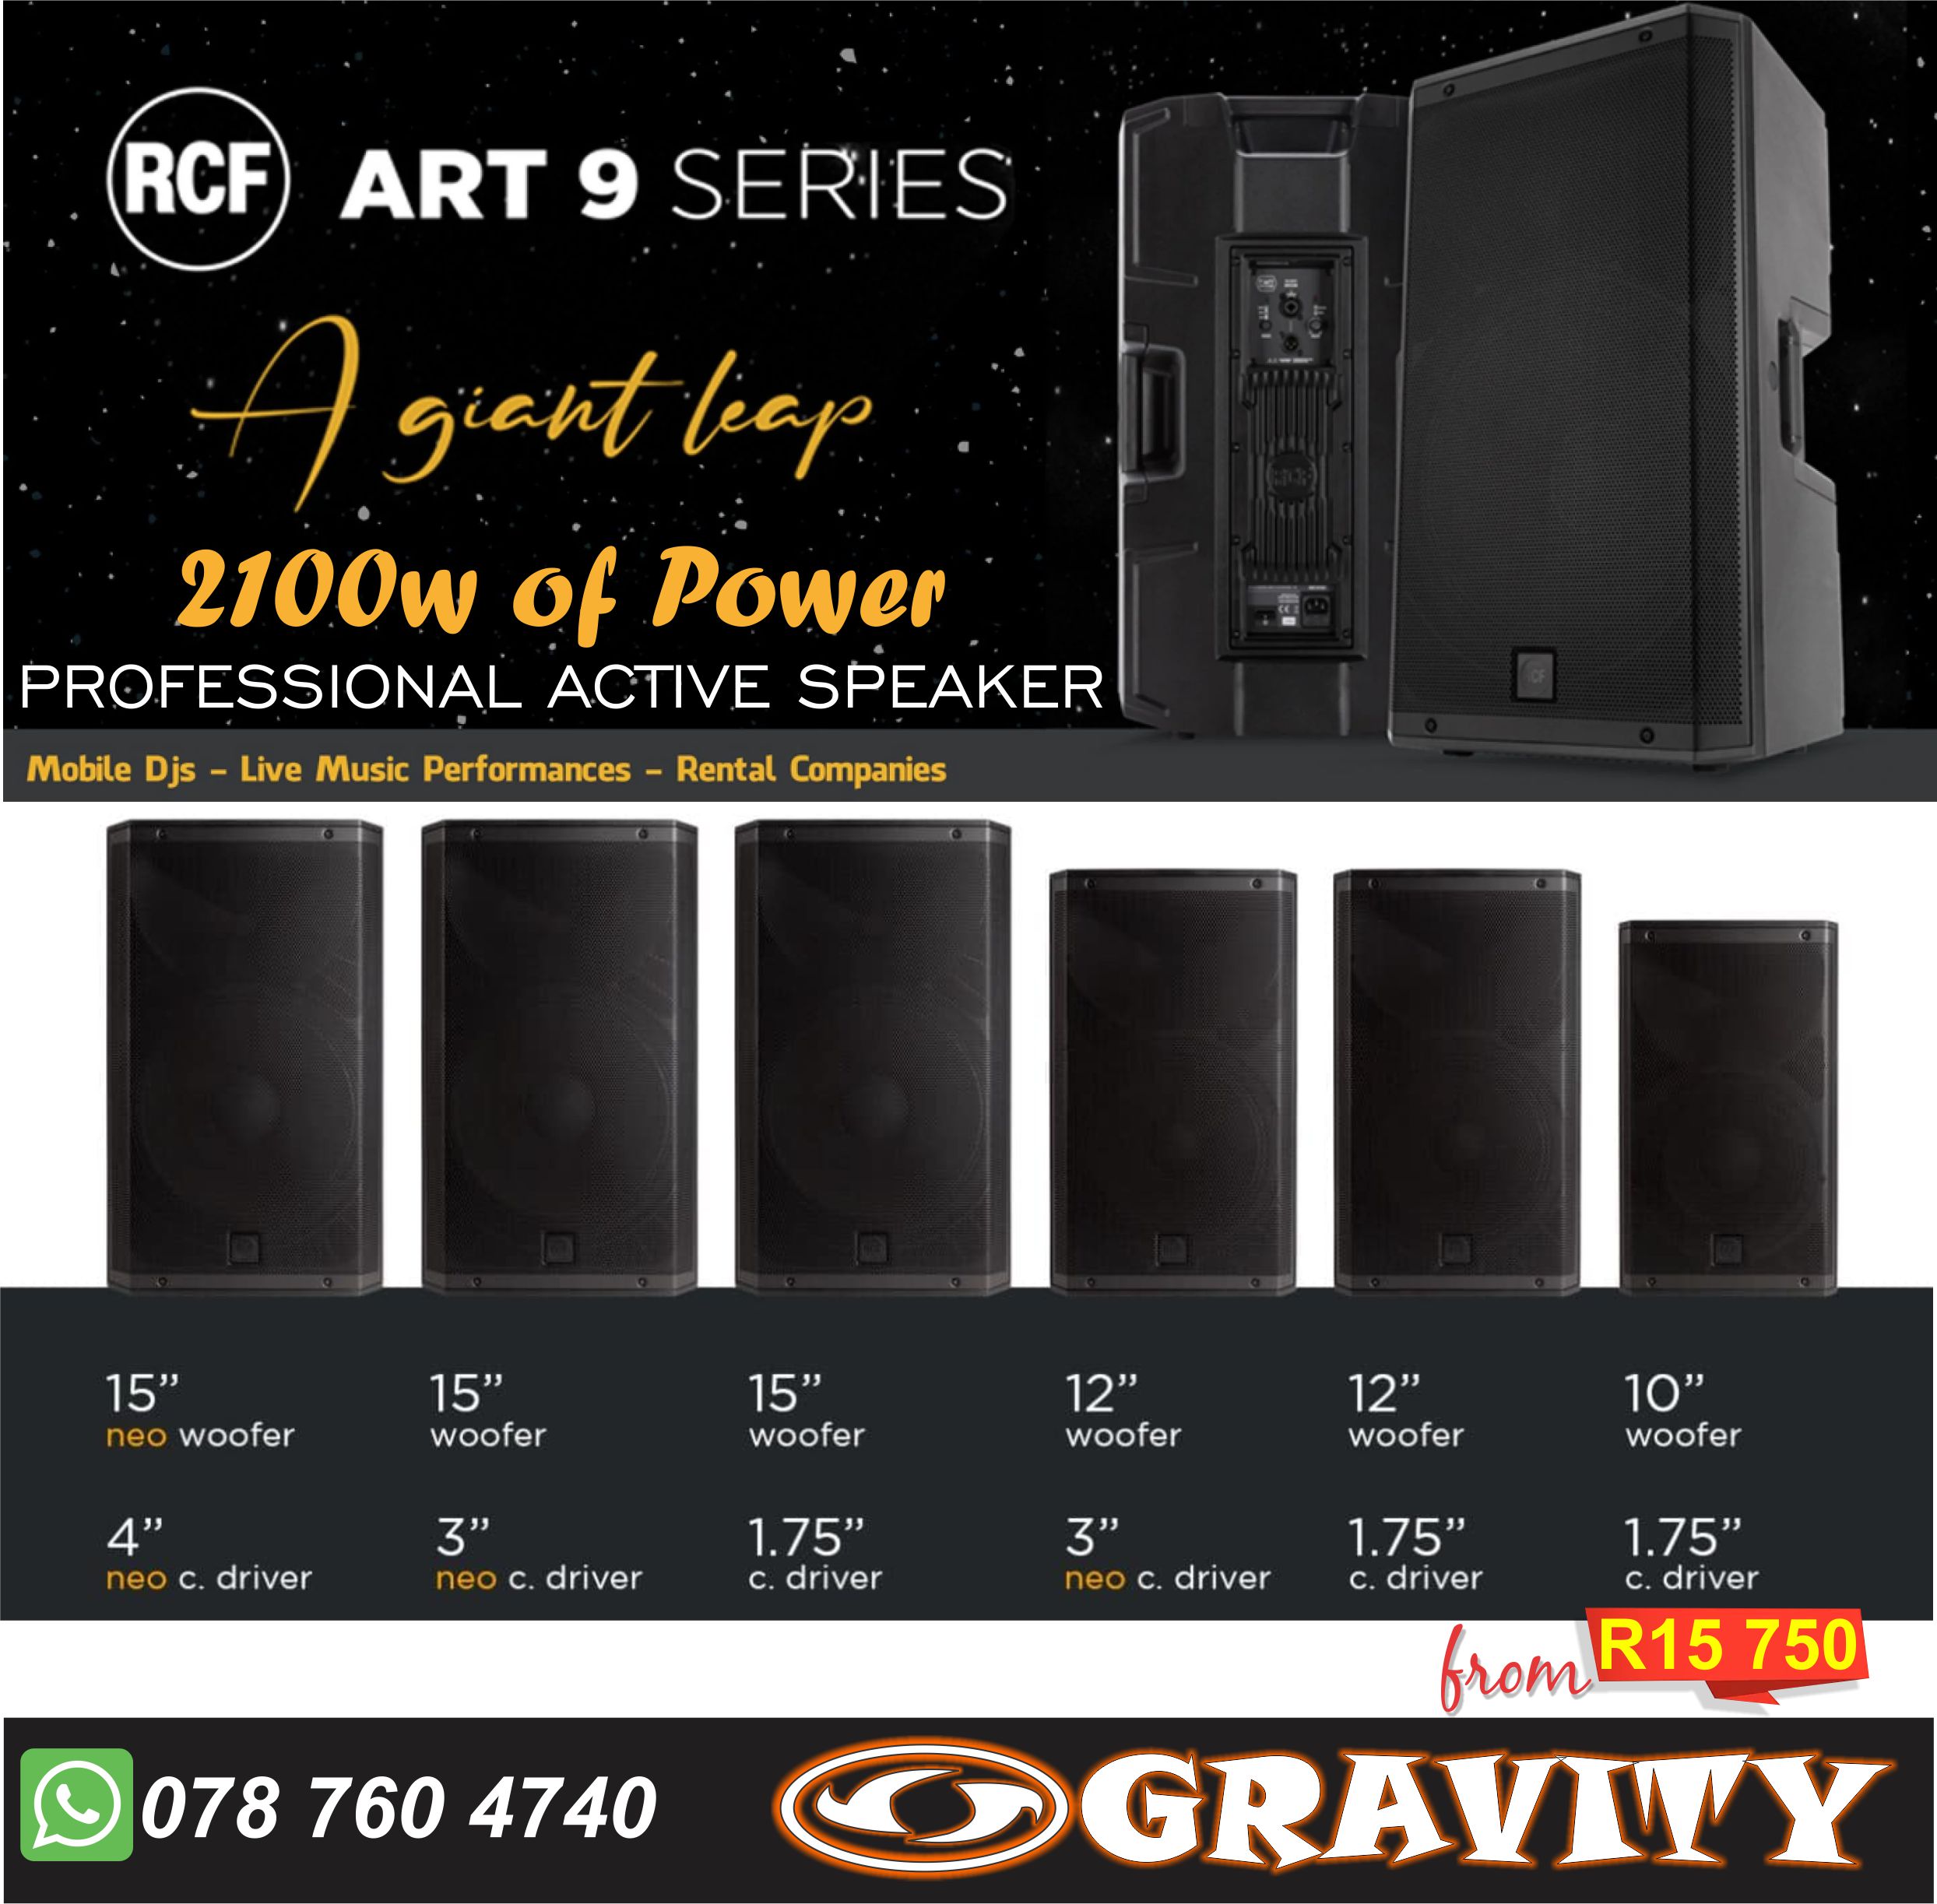 RCF | RCF durban gravity | rcf art 9 series | rcf professional audio speakers durban gravity | rcf professional art 9 series gravity audio durban | rcf art 9 speakers durban gravity 